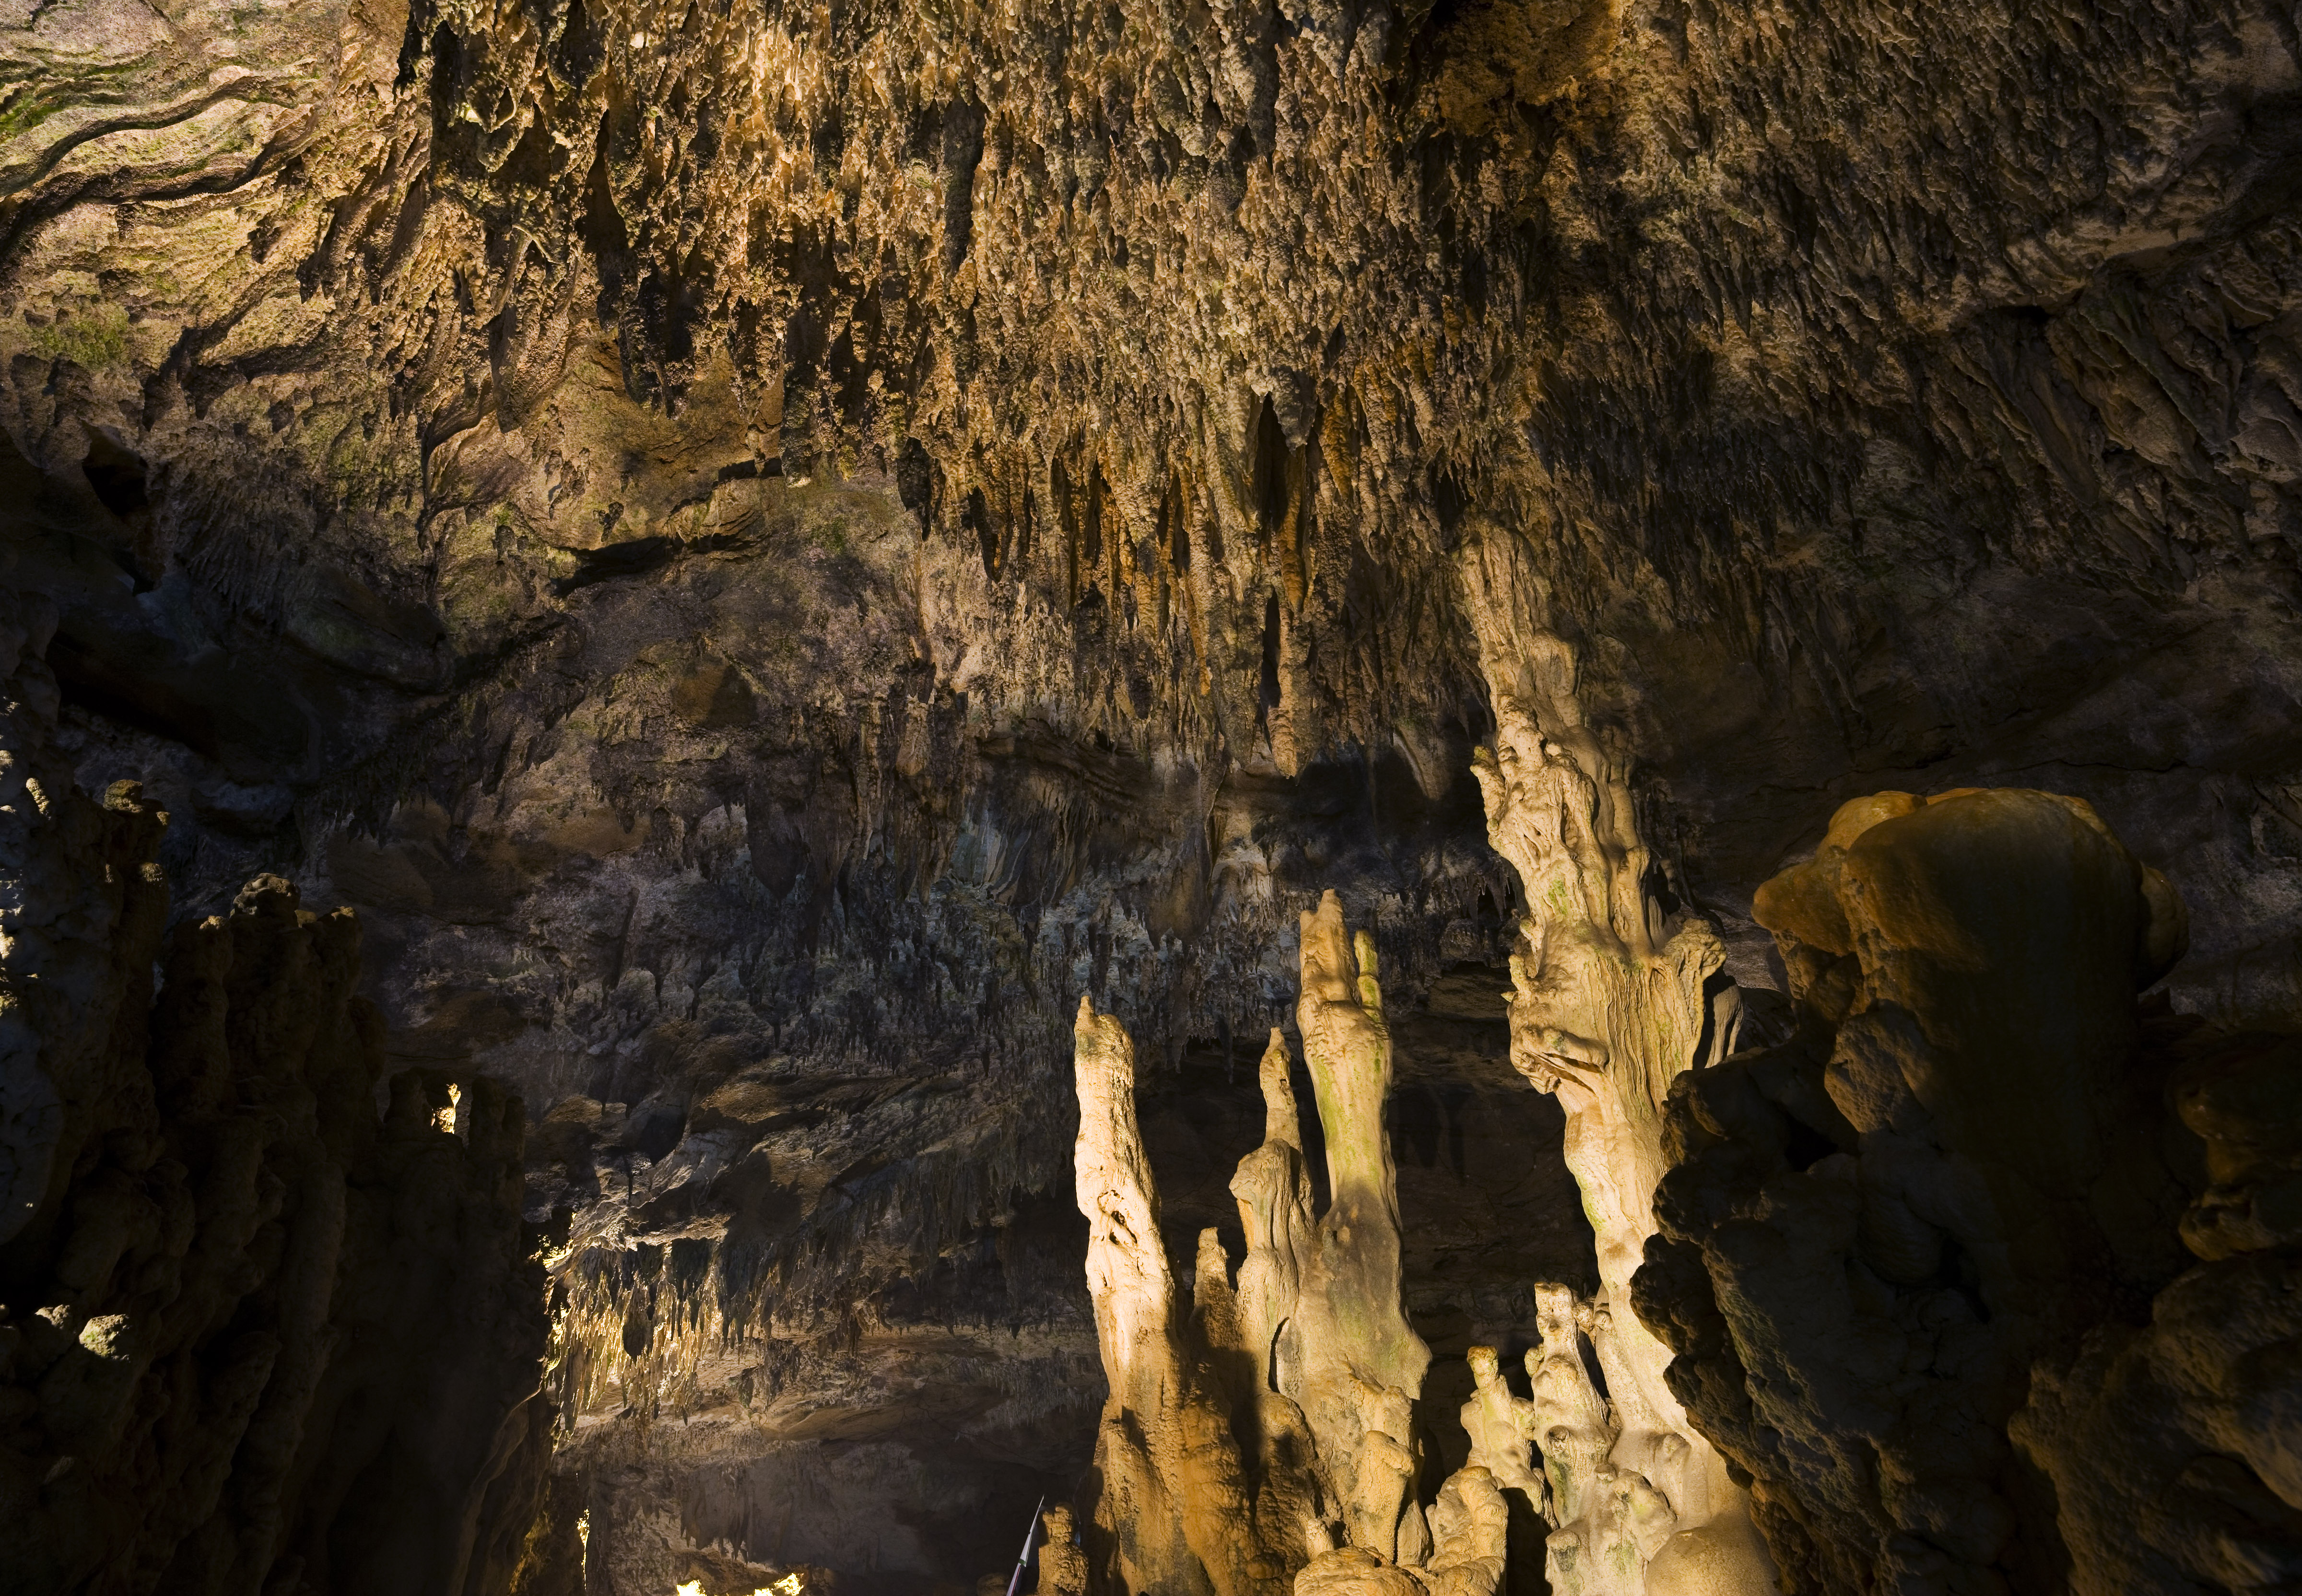 fotografia, material, livra, ajardine, imagine, proveja fotografia,Ishigaki-jima Ilha estalactite caverna, caverna de estalactite, Estalactite, Pedra calcria, caverna